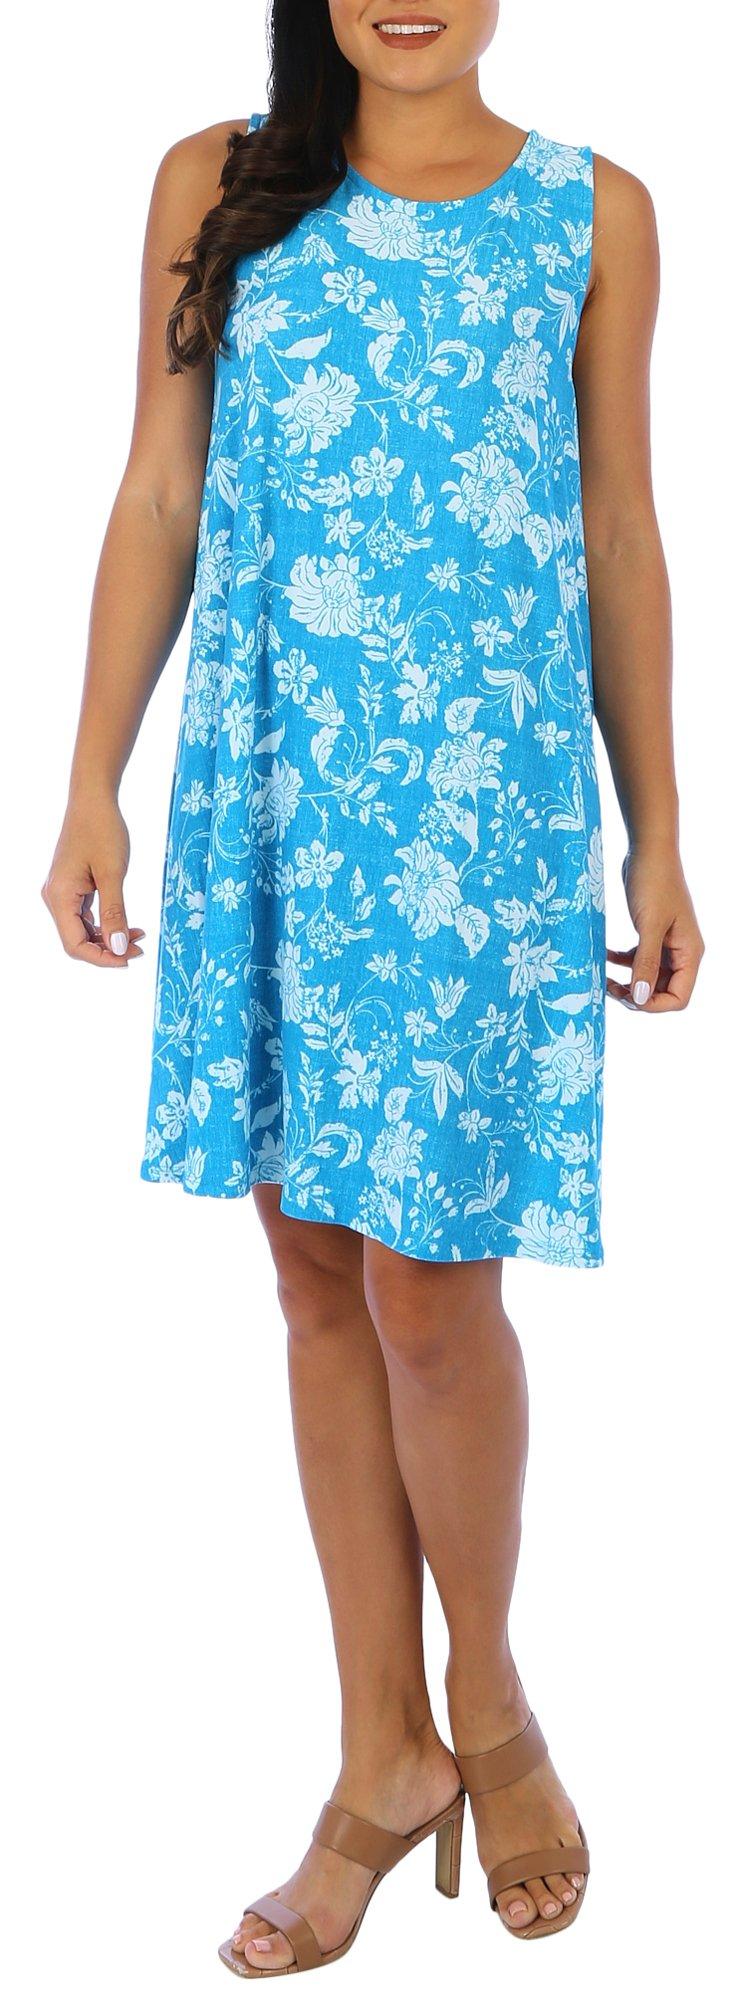 Allison Brittney Womens Floral Sleeveless Dress